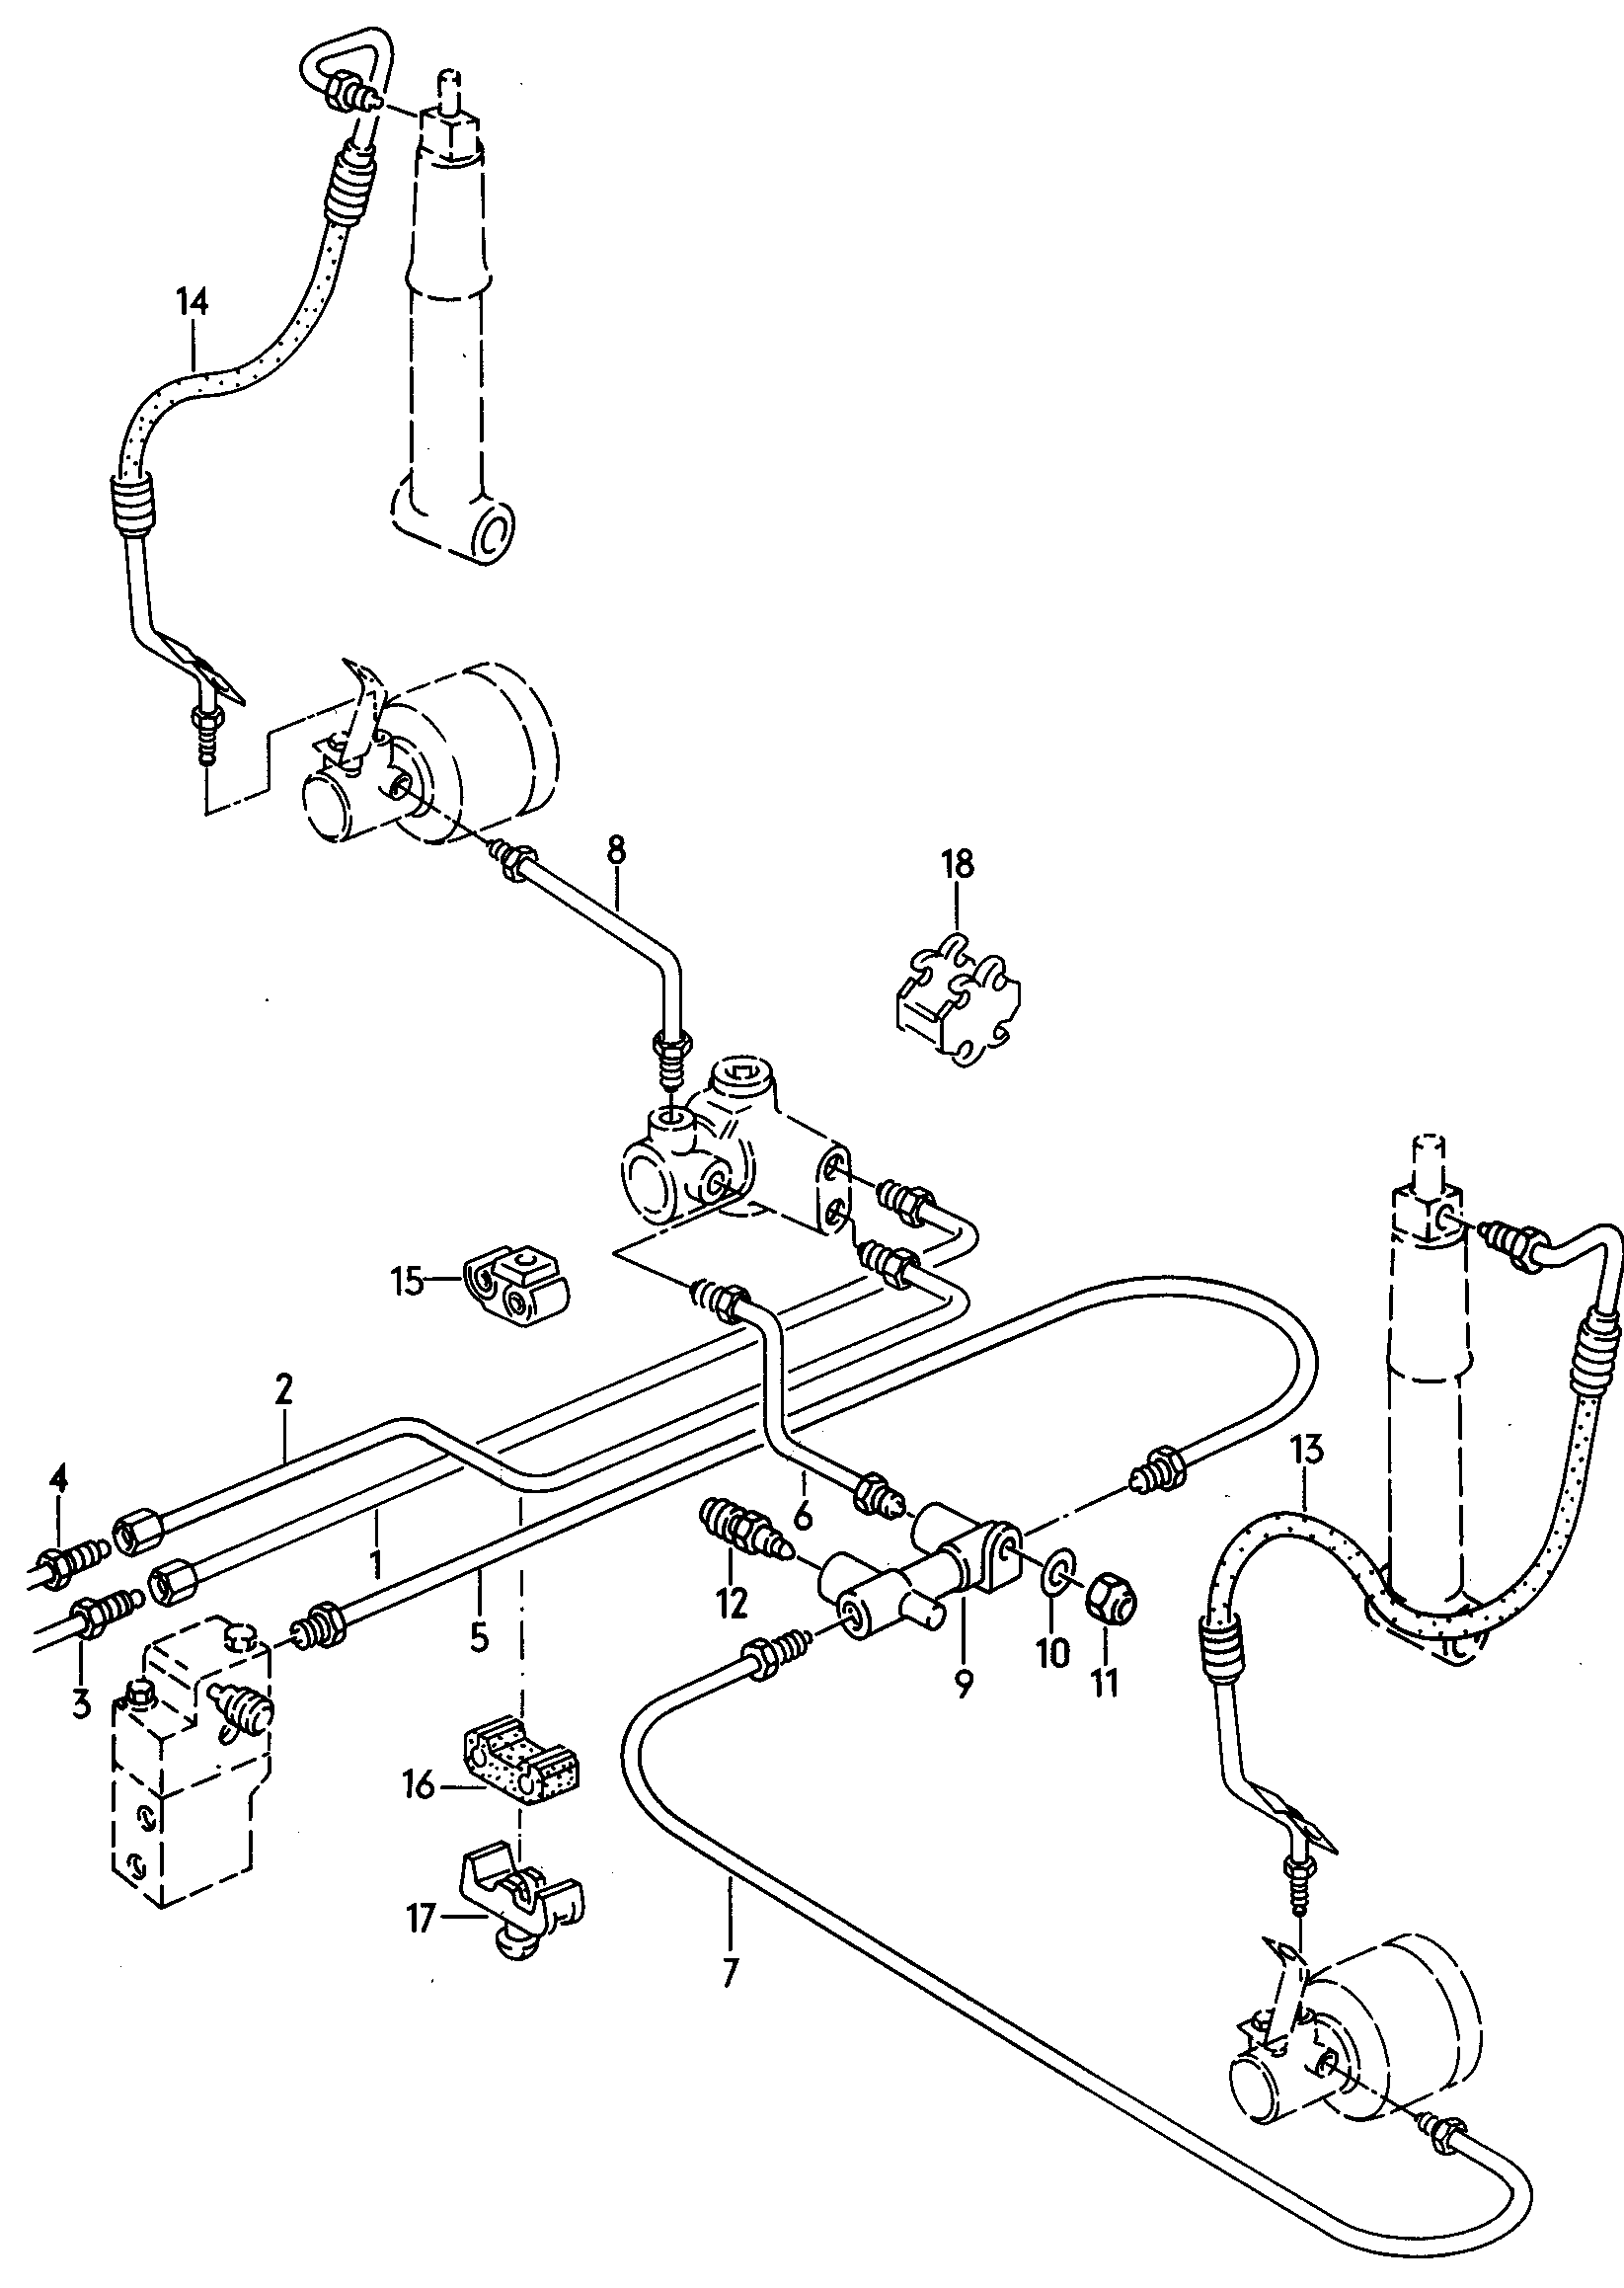 piezas conexion p. instal.
reguladora nivel - Audi V8(V8)  